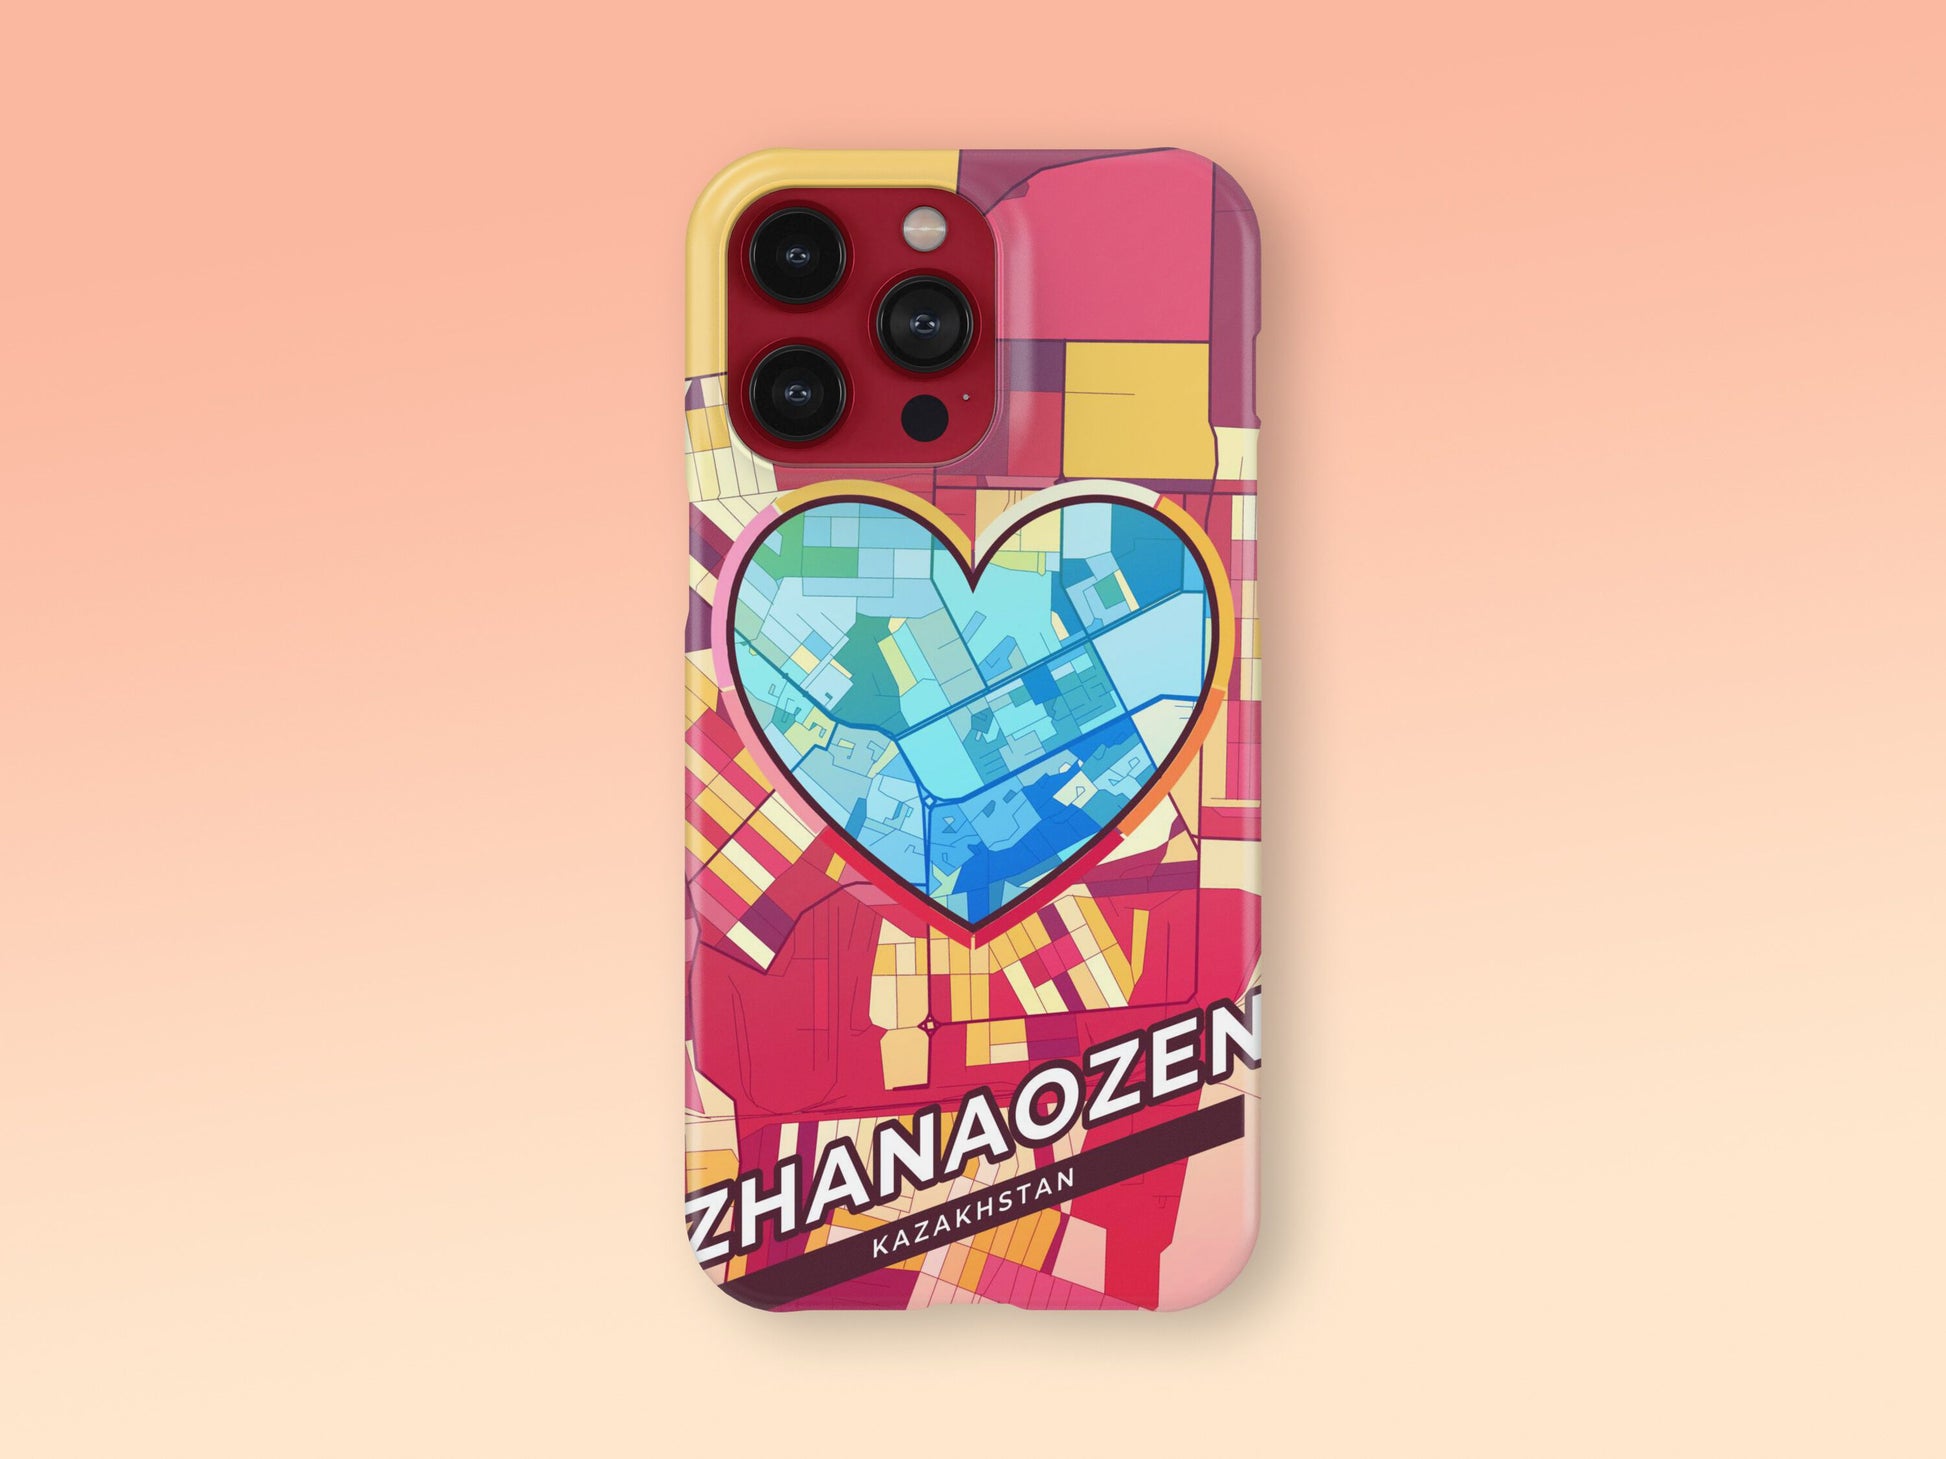 Zhanaozen Kazakhstan slim phone case with colorful icon 2